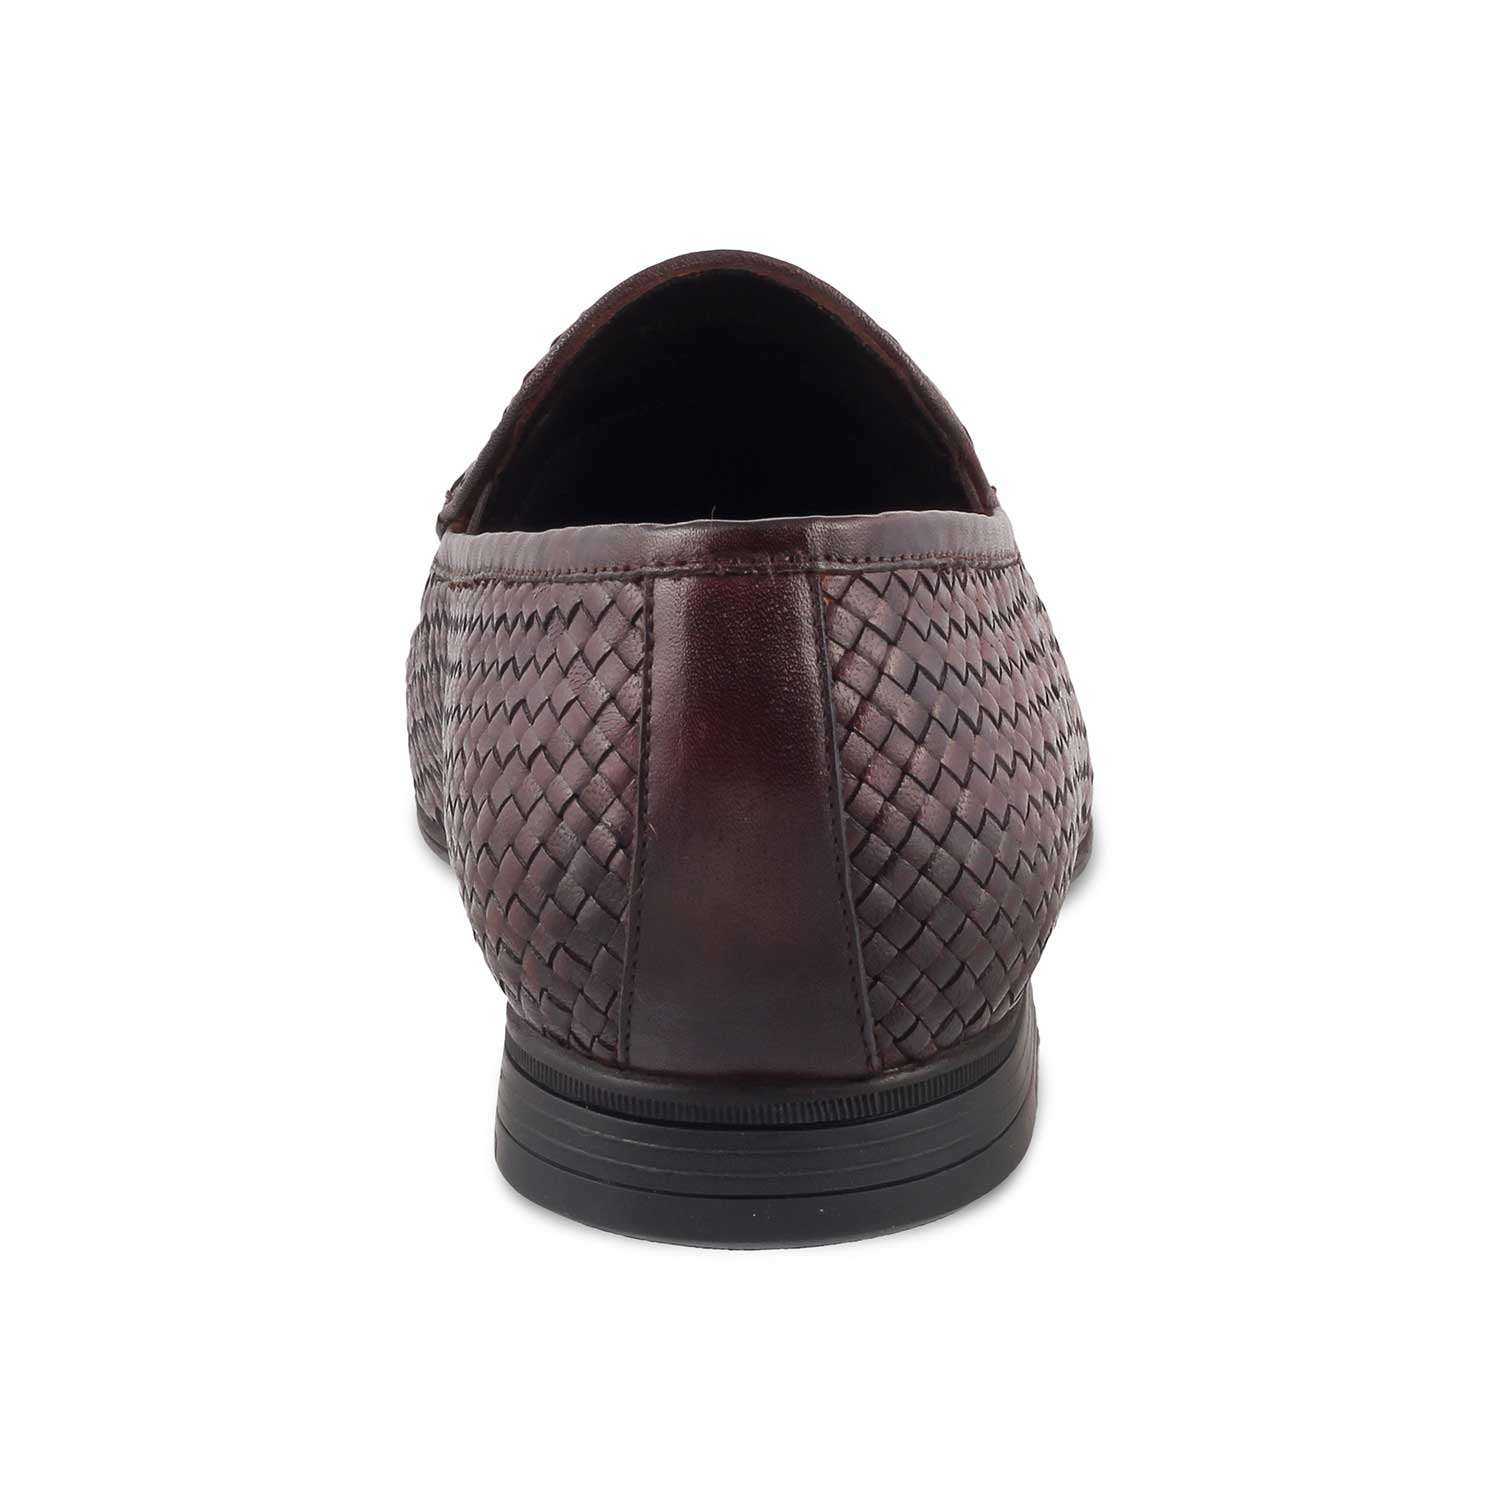 Tresmode-The Soweave Brown Men's Leather Tassel Loafers Tresmode-Tresmode